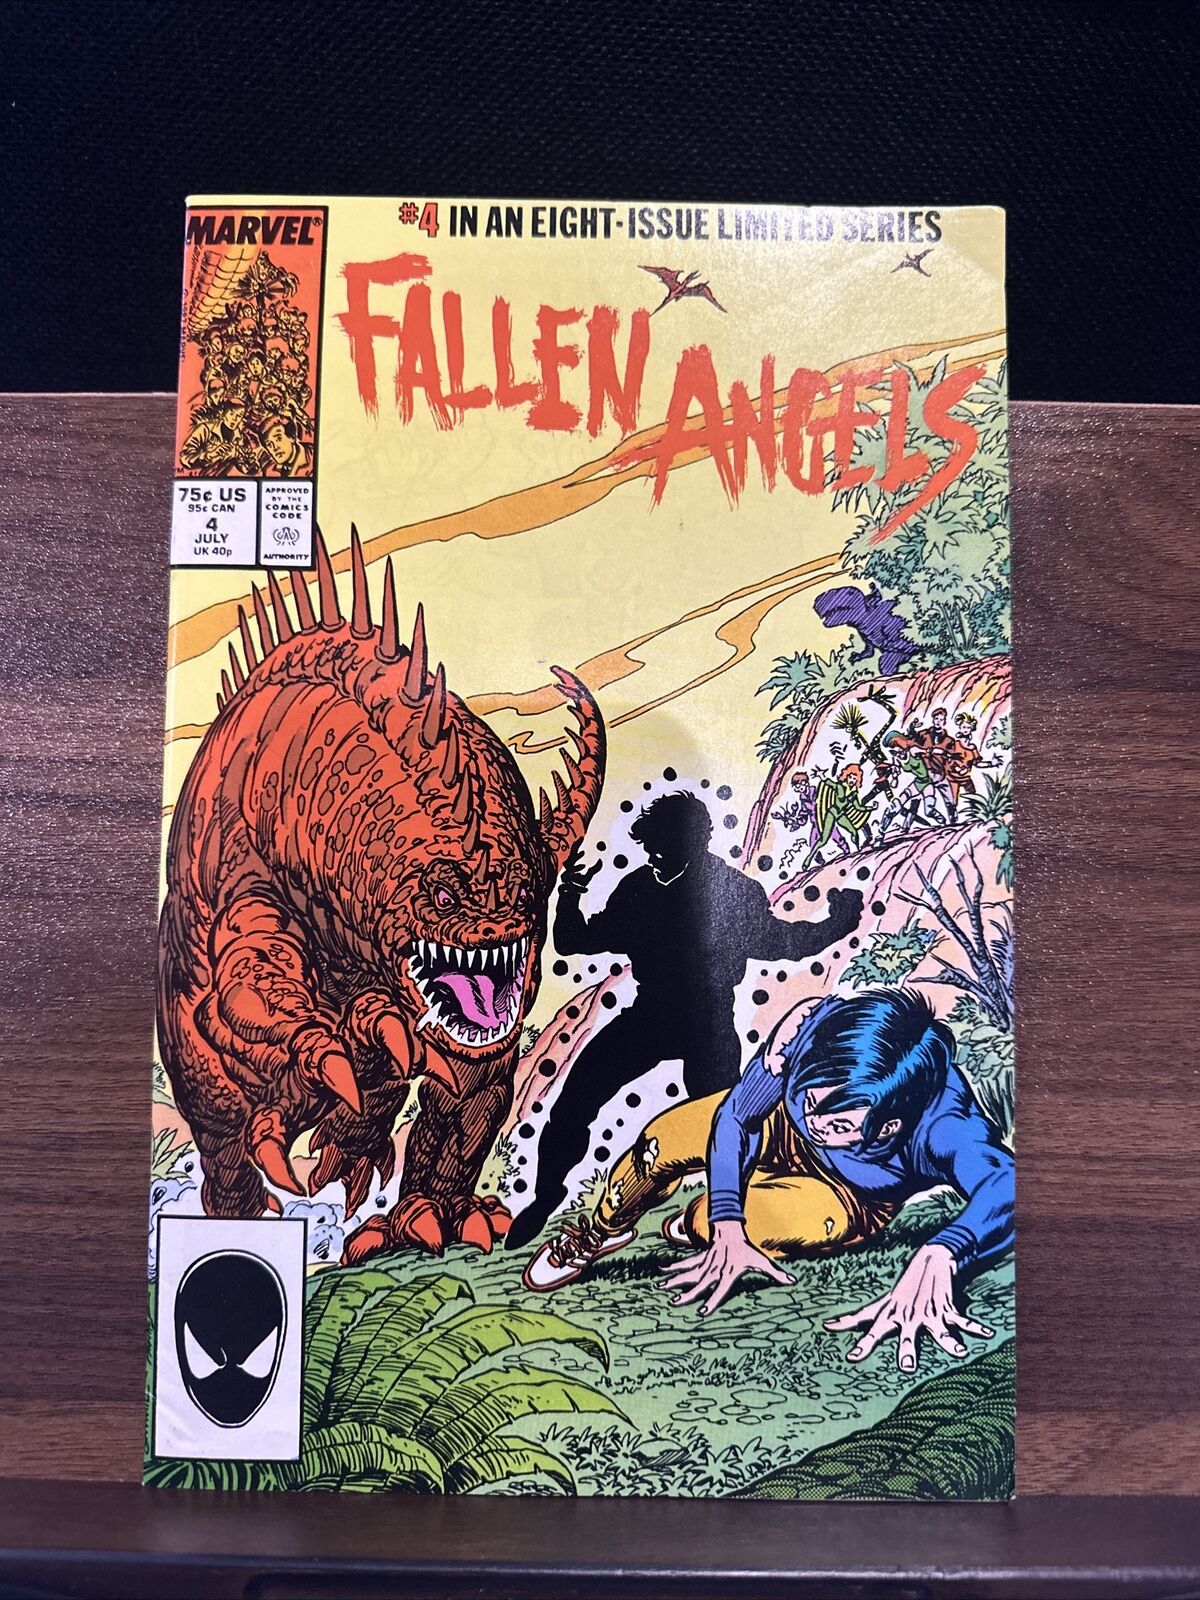 Fallen Angels #4 (Jul 1987, Marvel) Limited Series New Mutants Spin Off